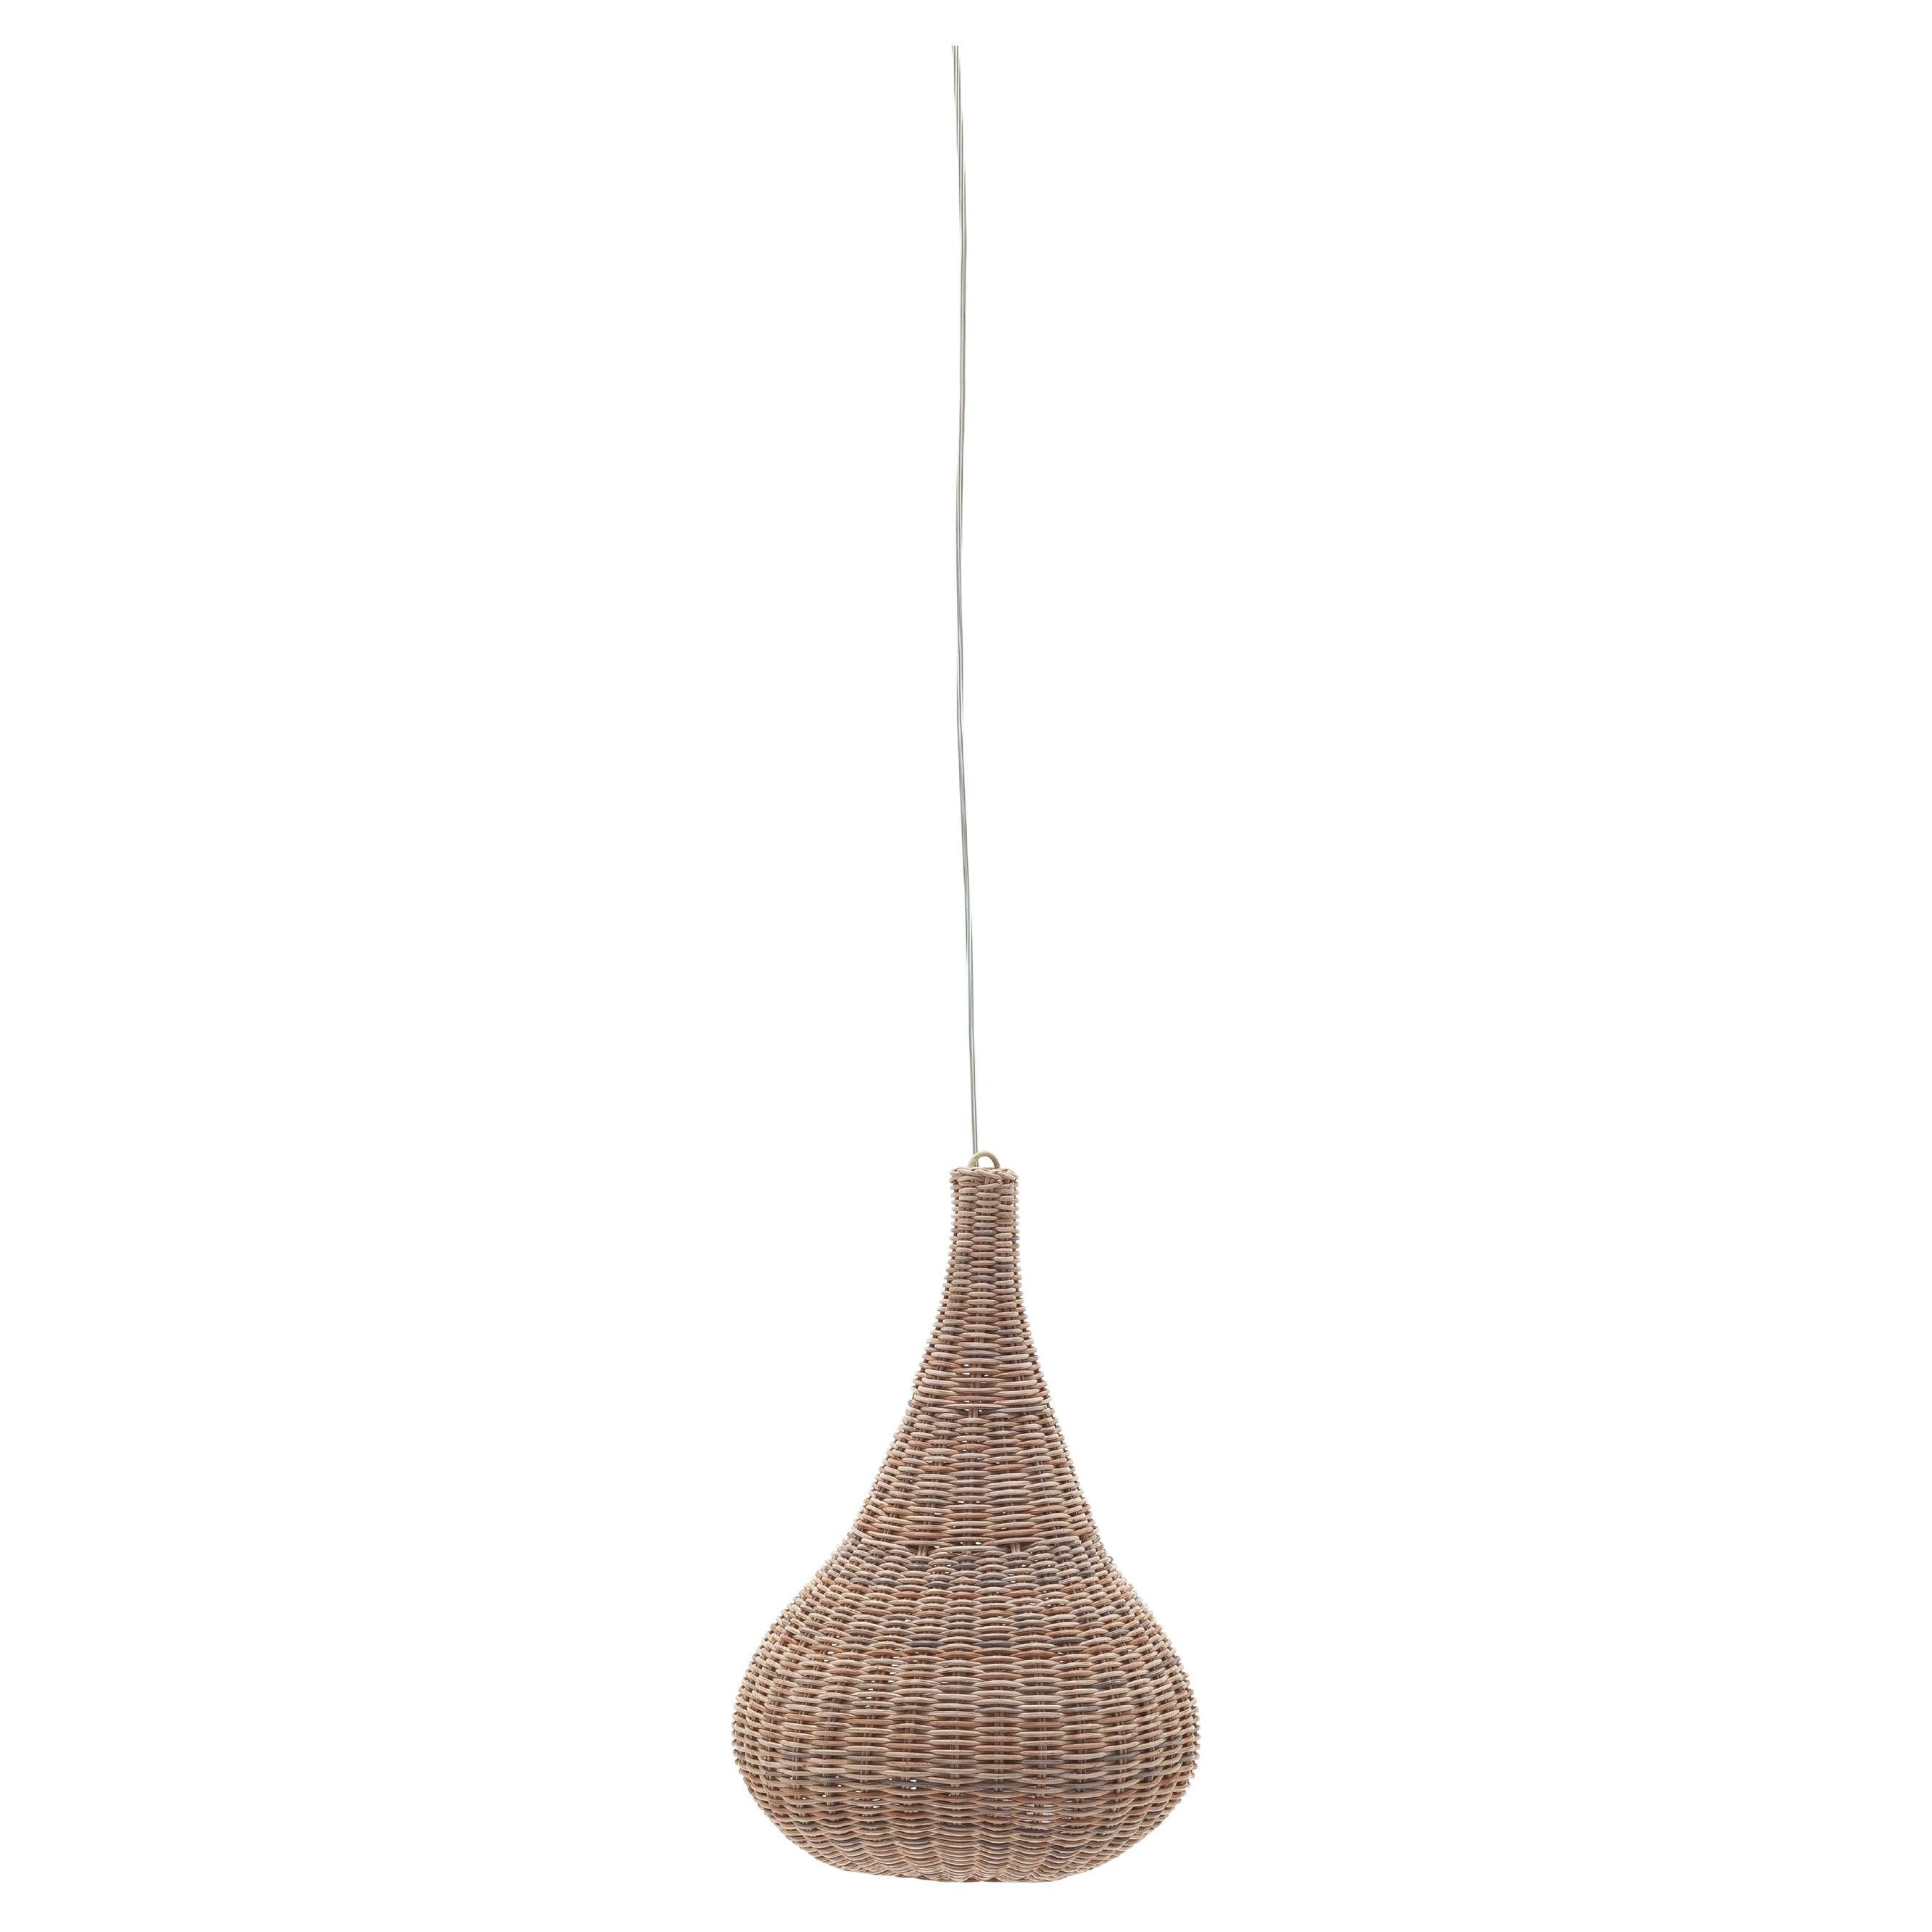 Gervasoni Spin 95 Suspension Lamp in Natural Melange Rattan by Michael Sodeau For Sale